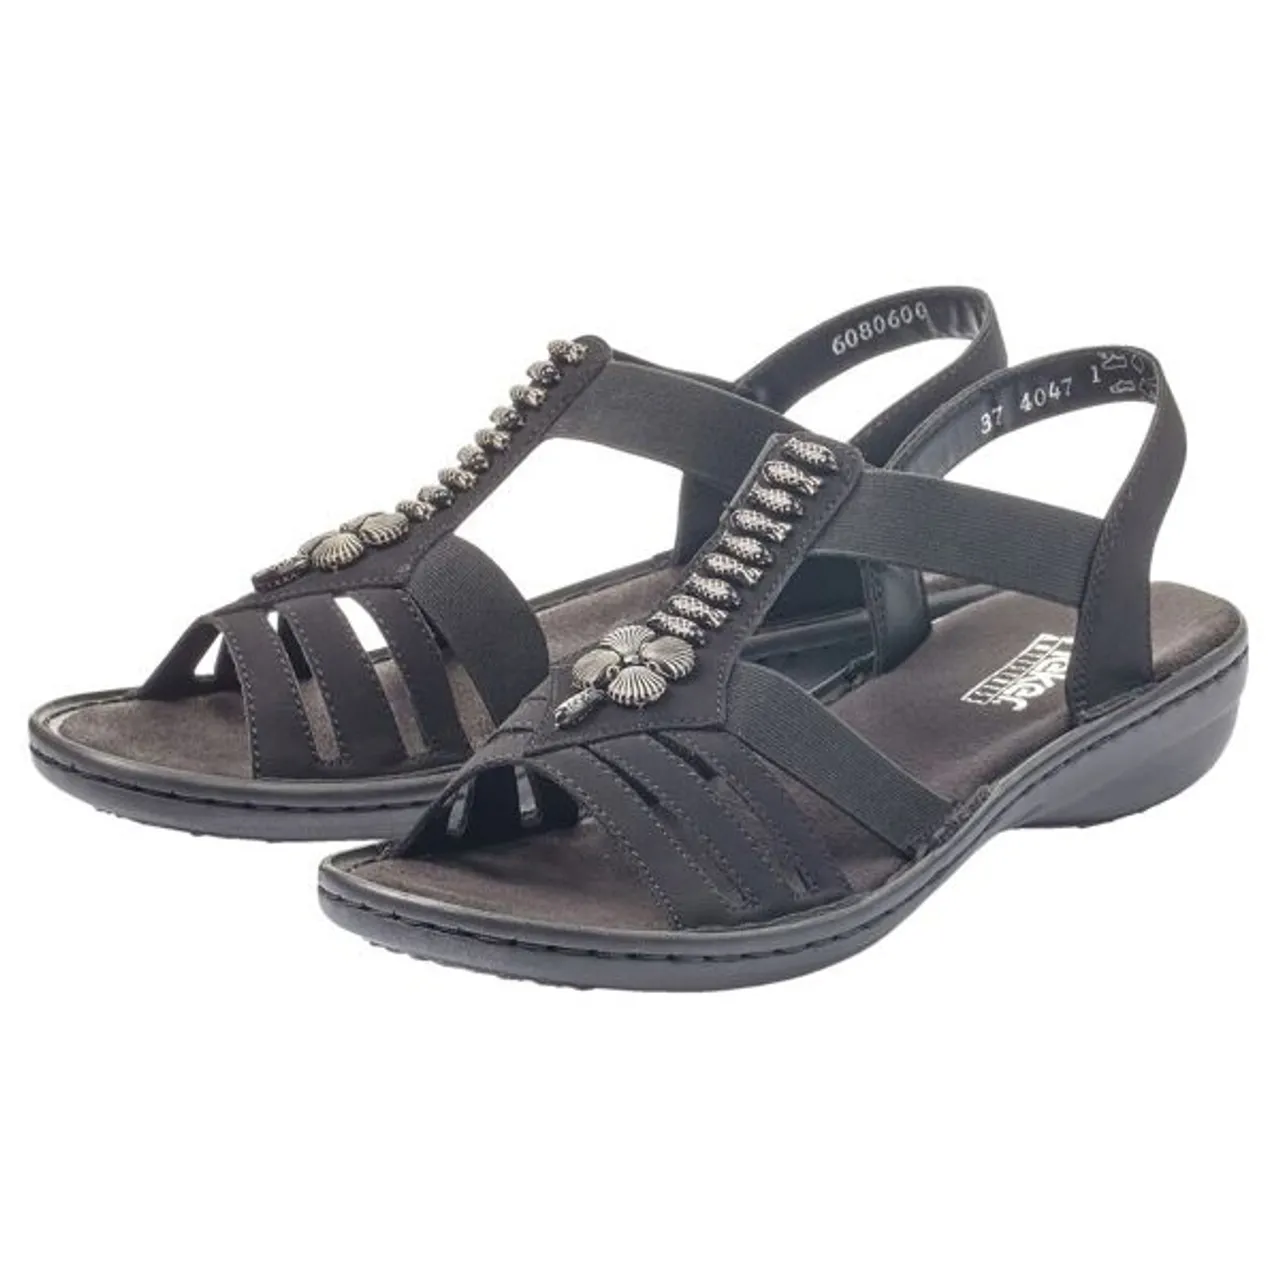 Riemchensandale RIEKER Gr. 38, schwarz (schwarz, black) Damen Schuhe Keilsandaletten